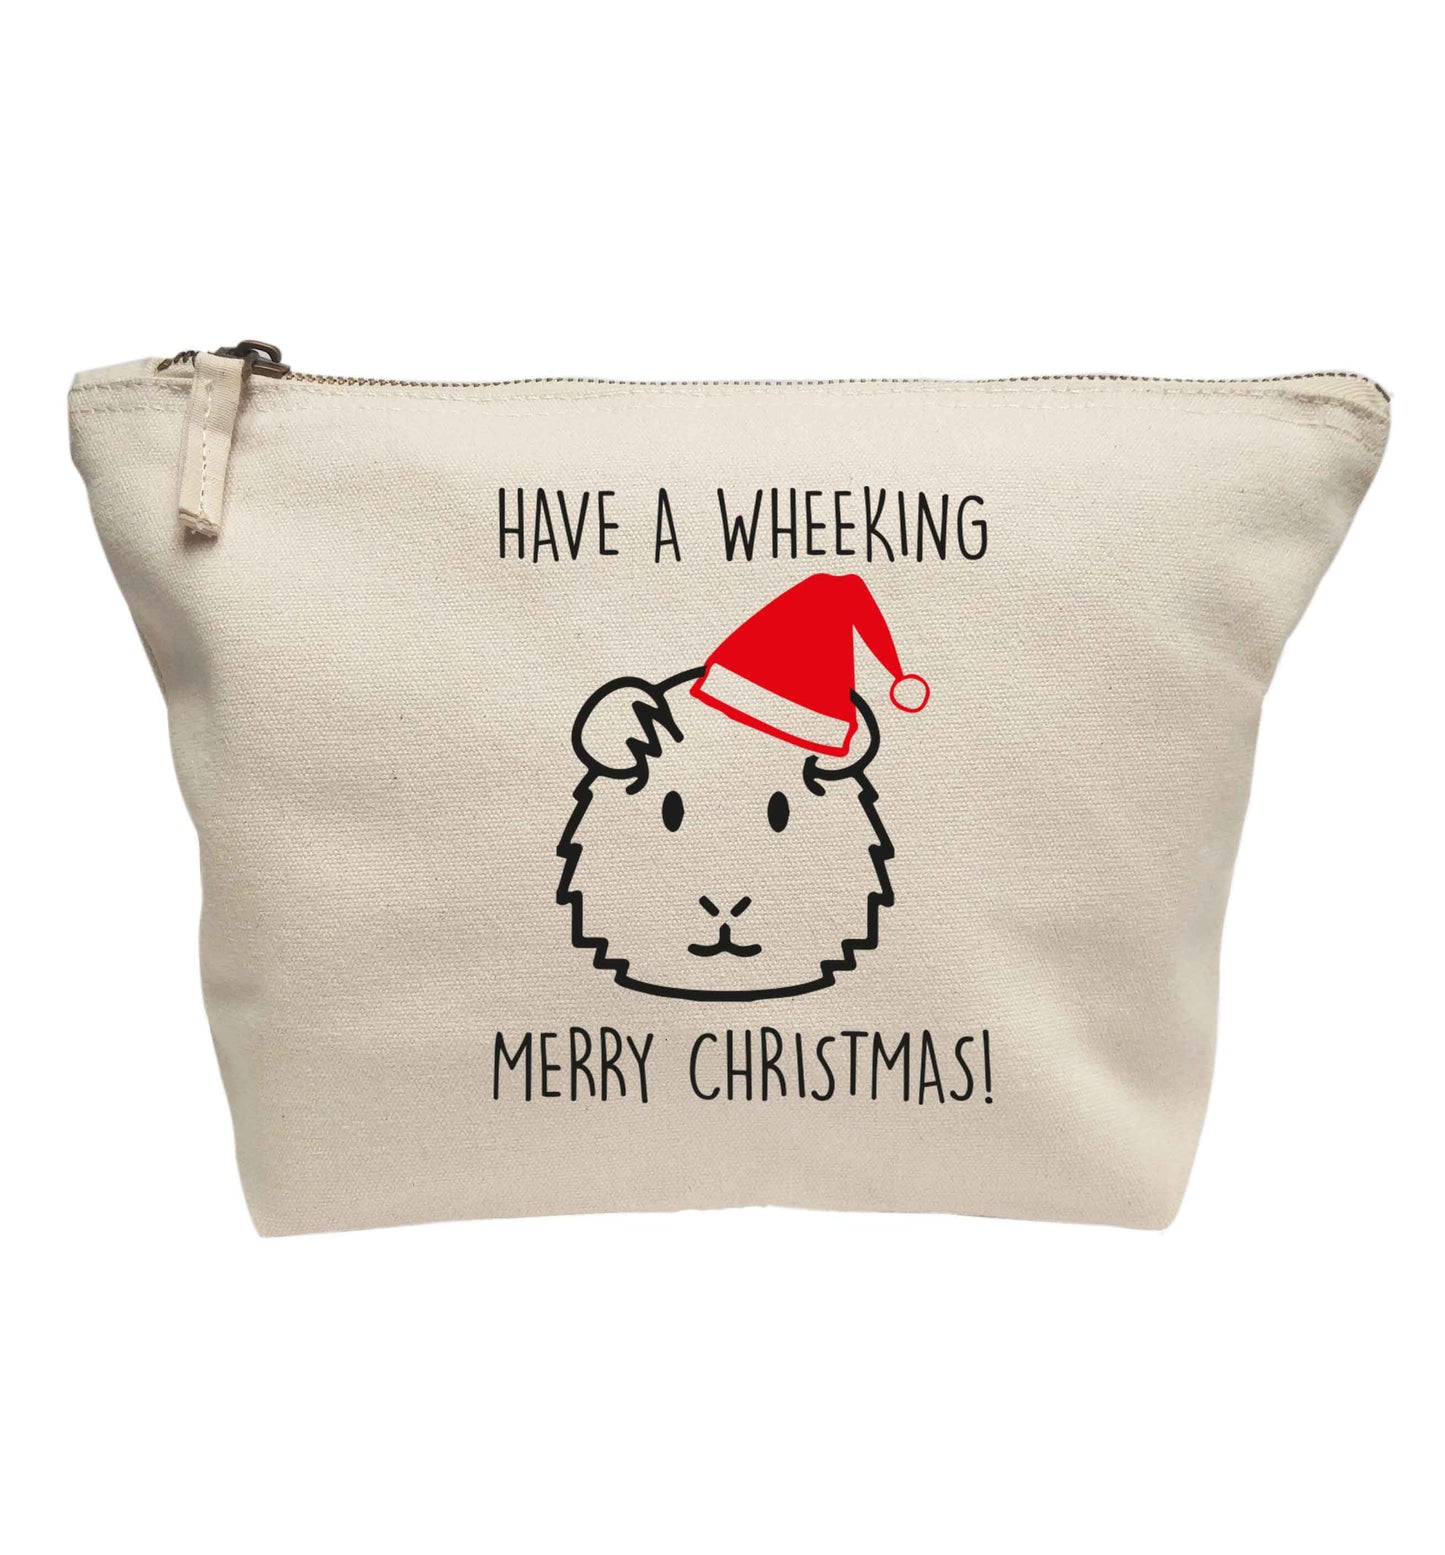 Have a wheeking merry Christmas | Makeup / wash bag